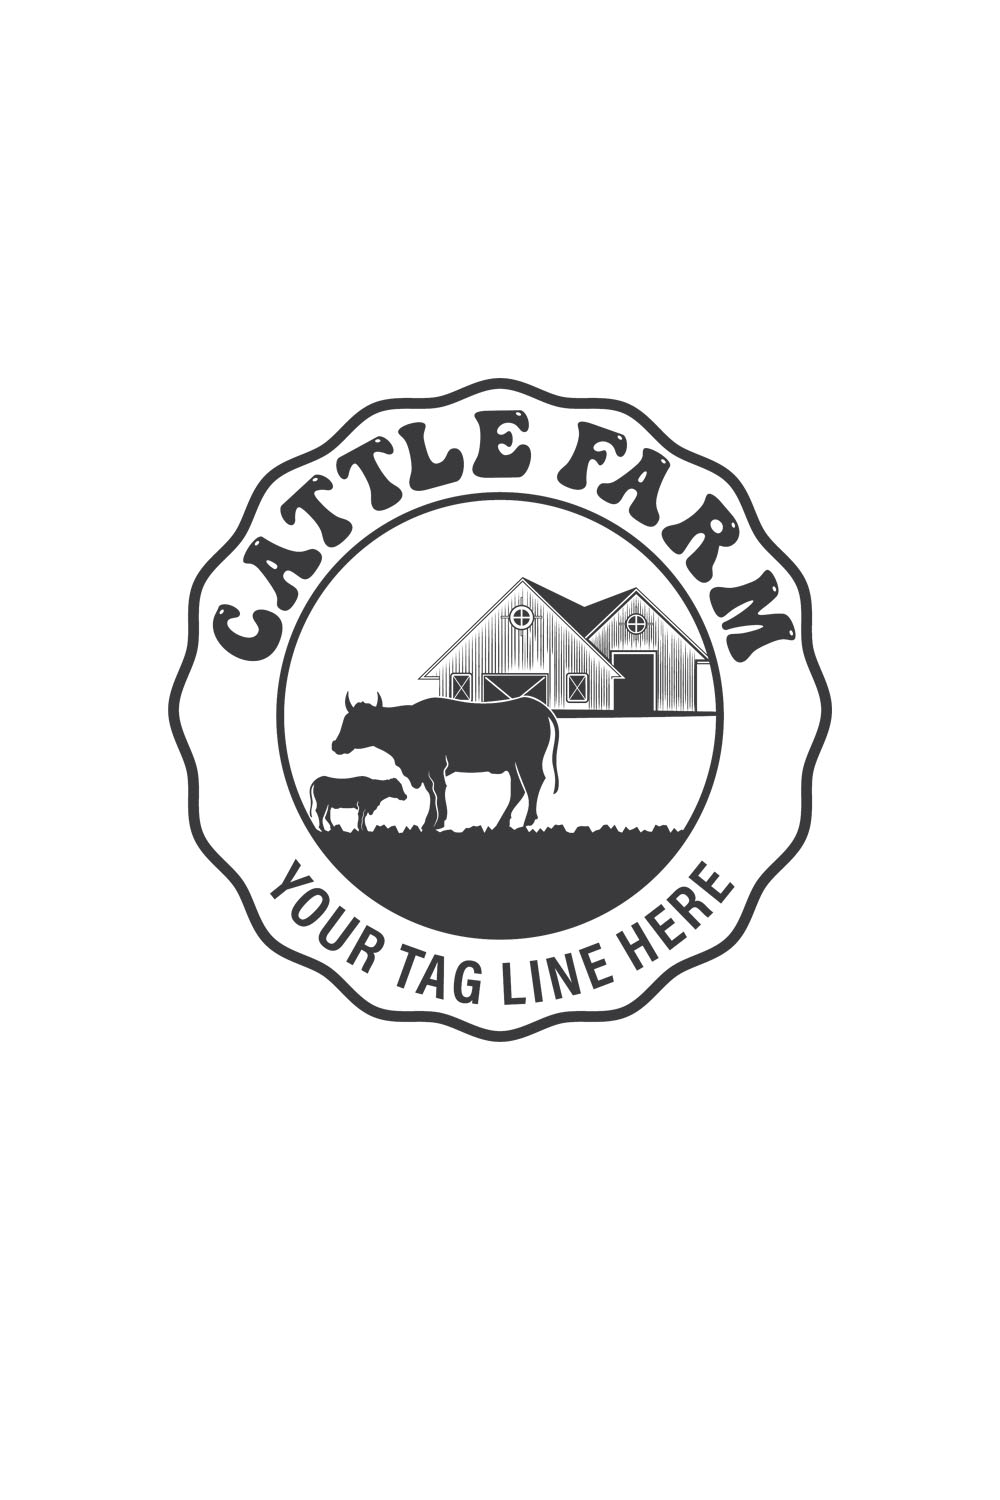 Cattle Farm logo Design professional logo design pinterest preview image.